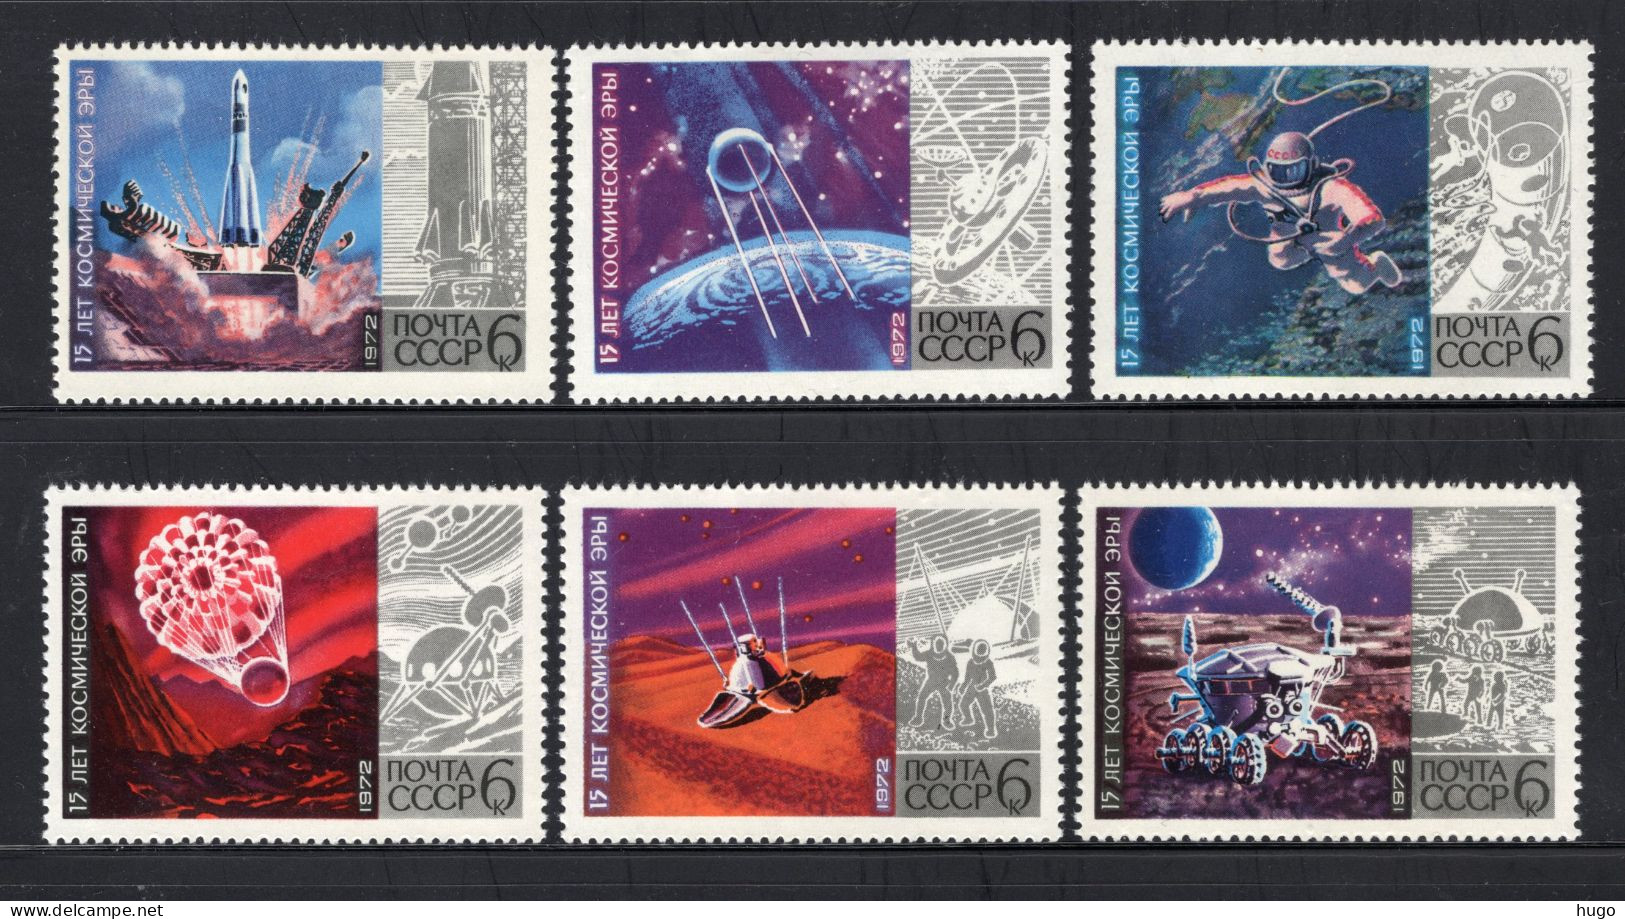 RUSLAND Yt. 3870/3875 MNH 1972 - Unused Stamps